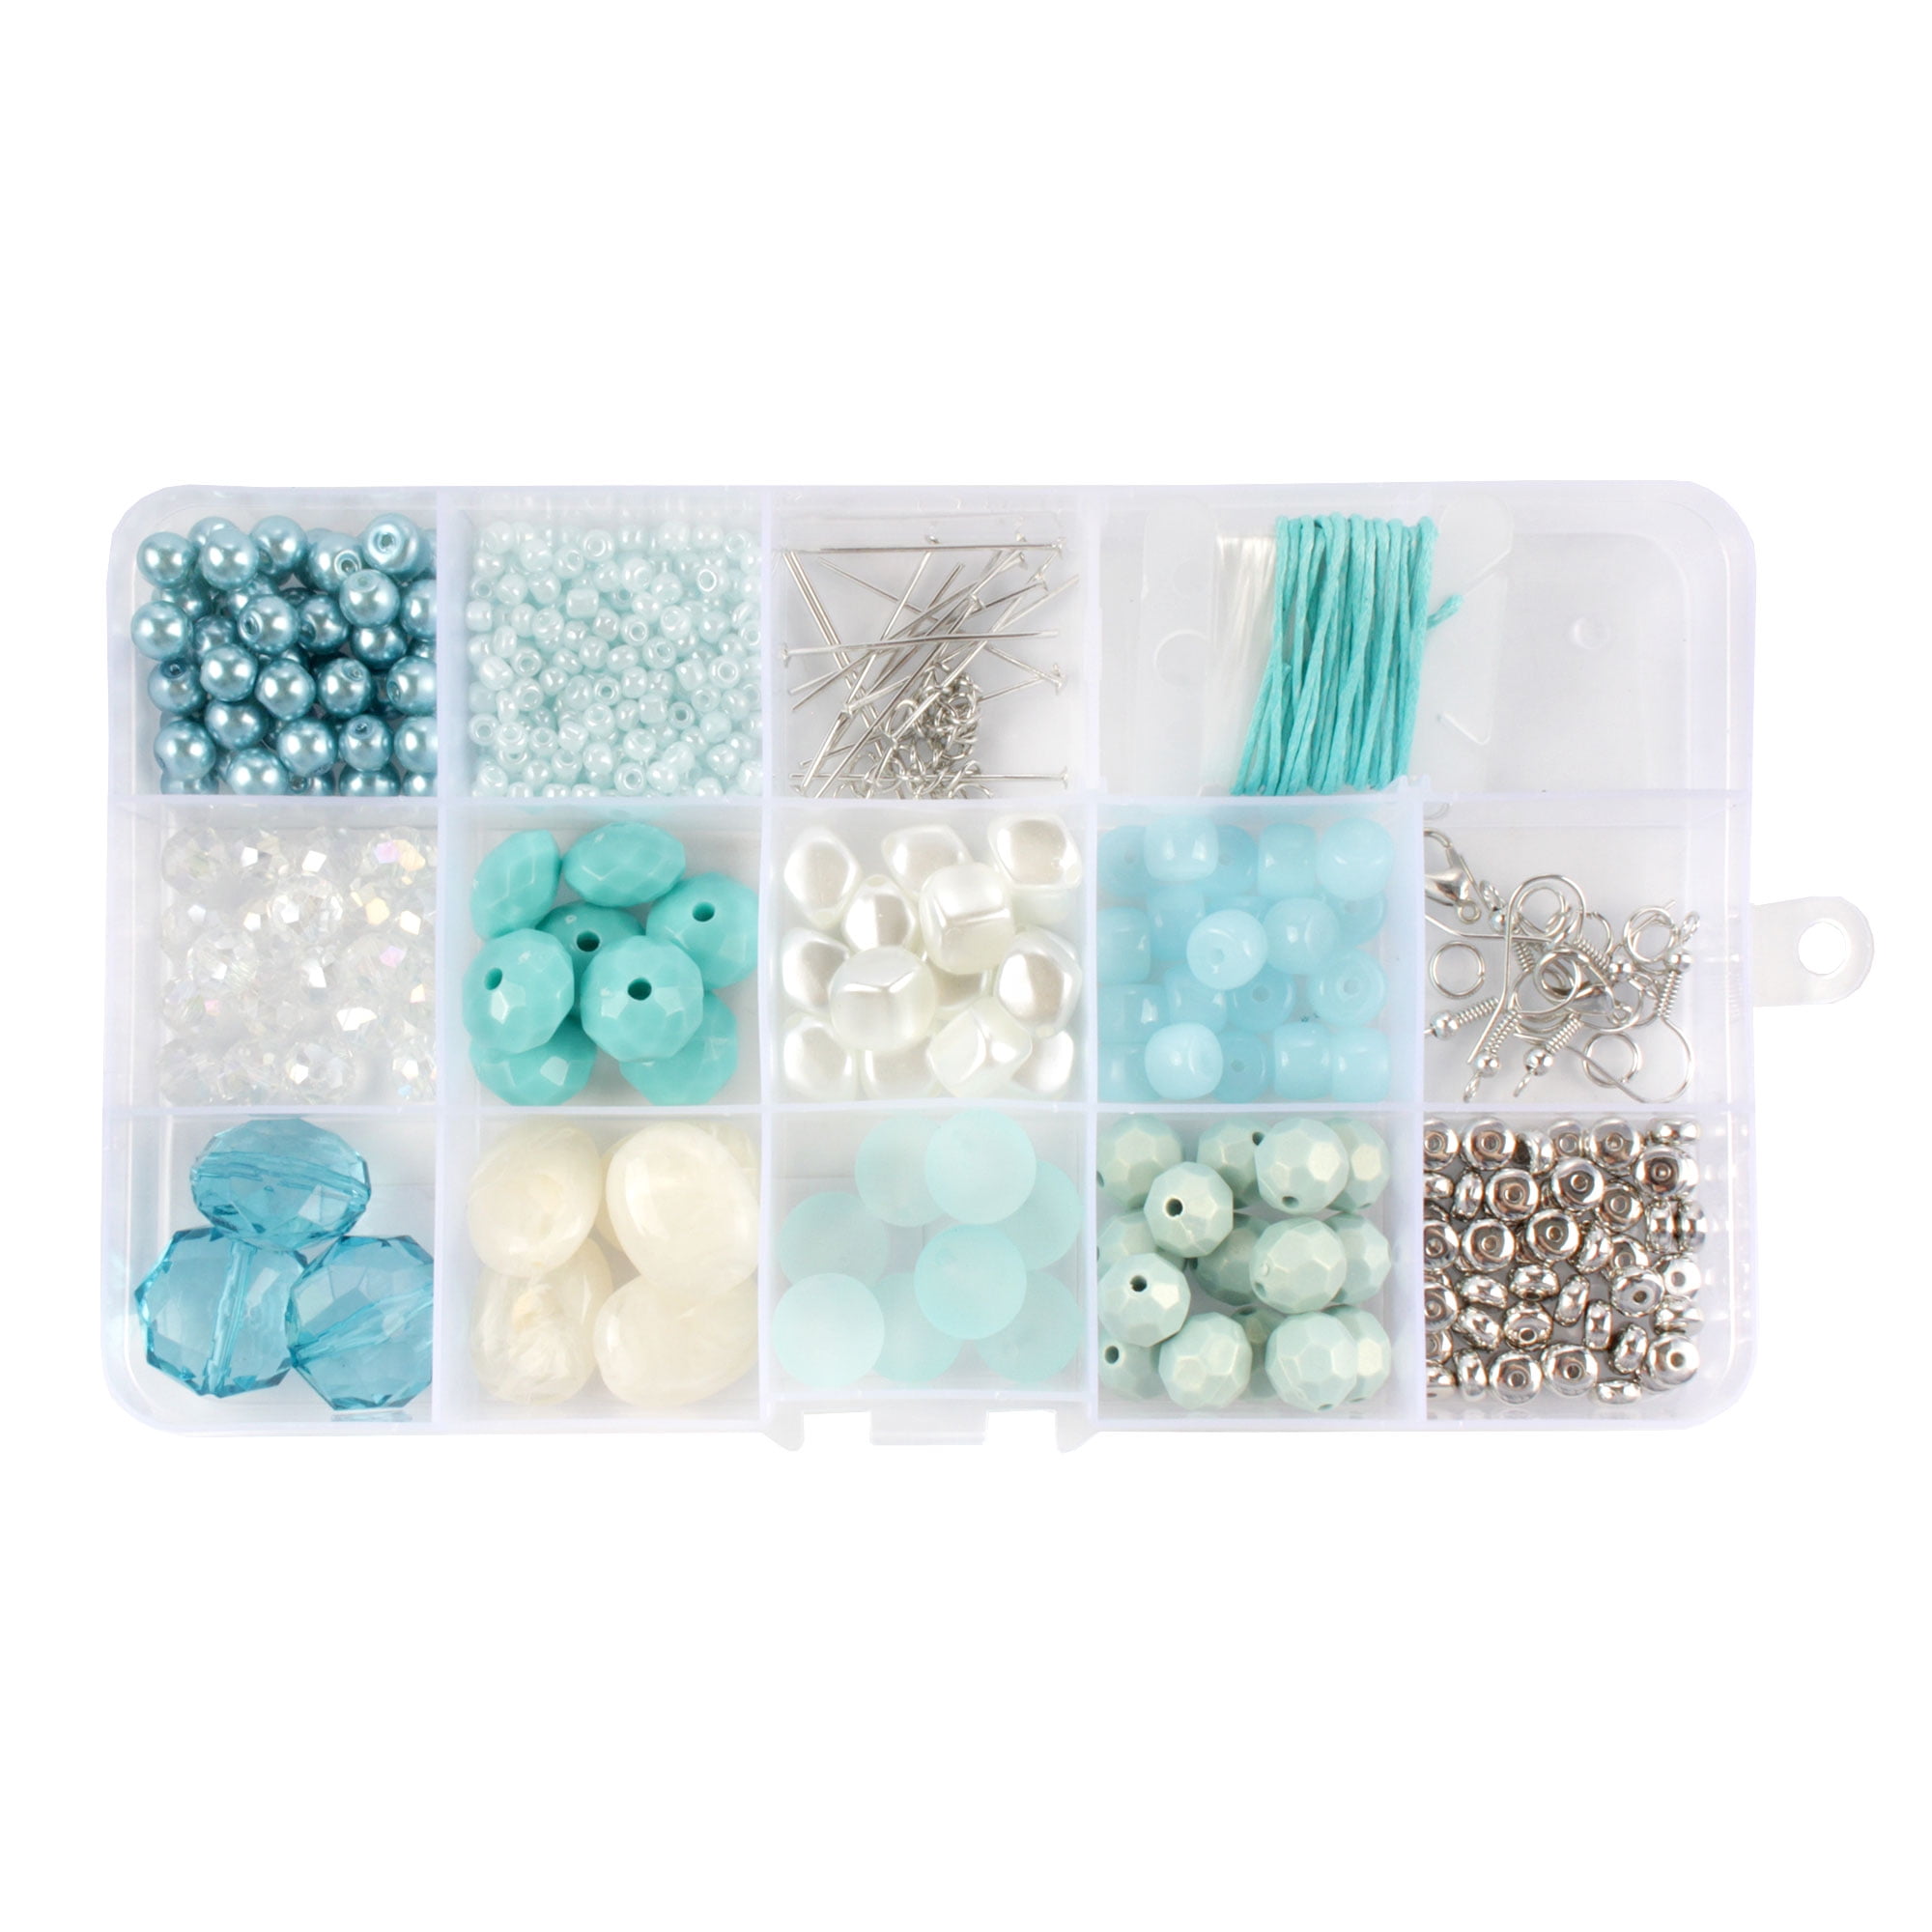 Nicoport 1960pcs Bracelet Beads Kit with Storage Box 28 Colors Beads Making Kit DIY Craft Beads Set 6mm Jewellery Beads Kit Bright Color Jewelry